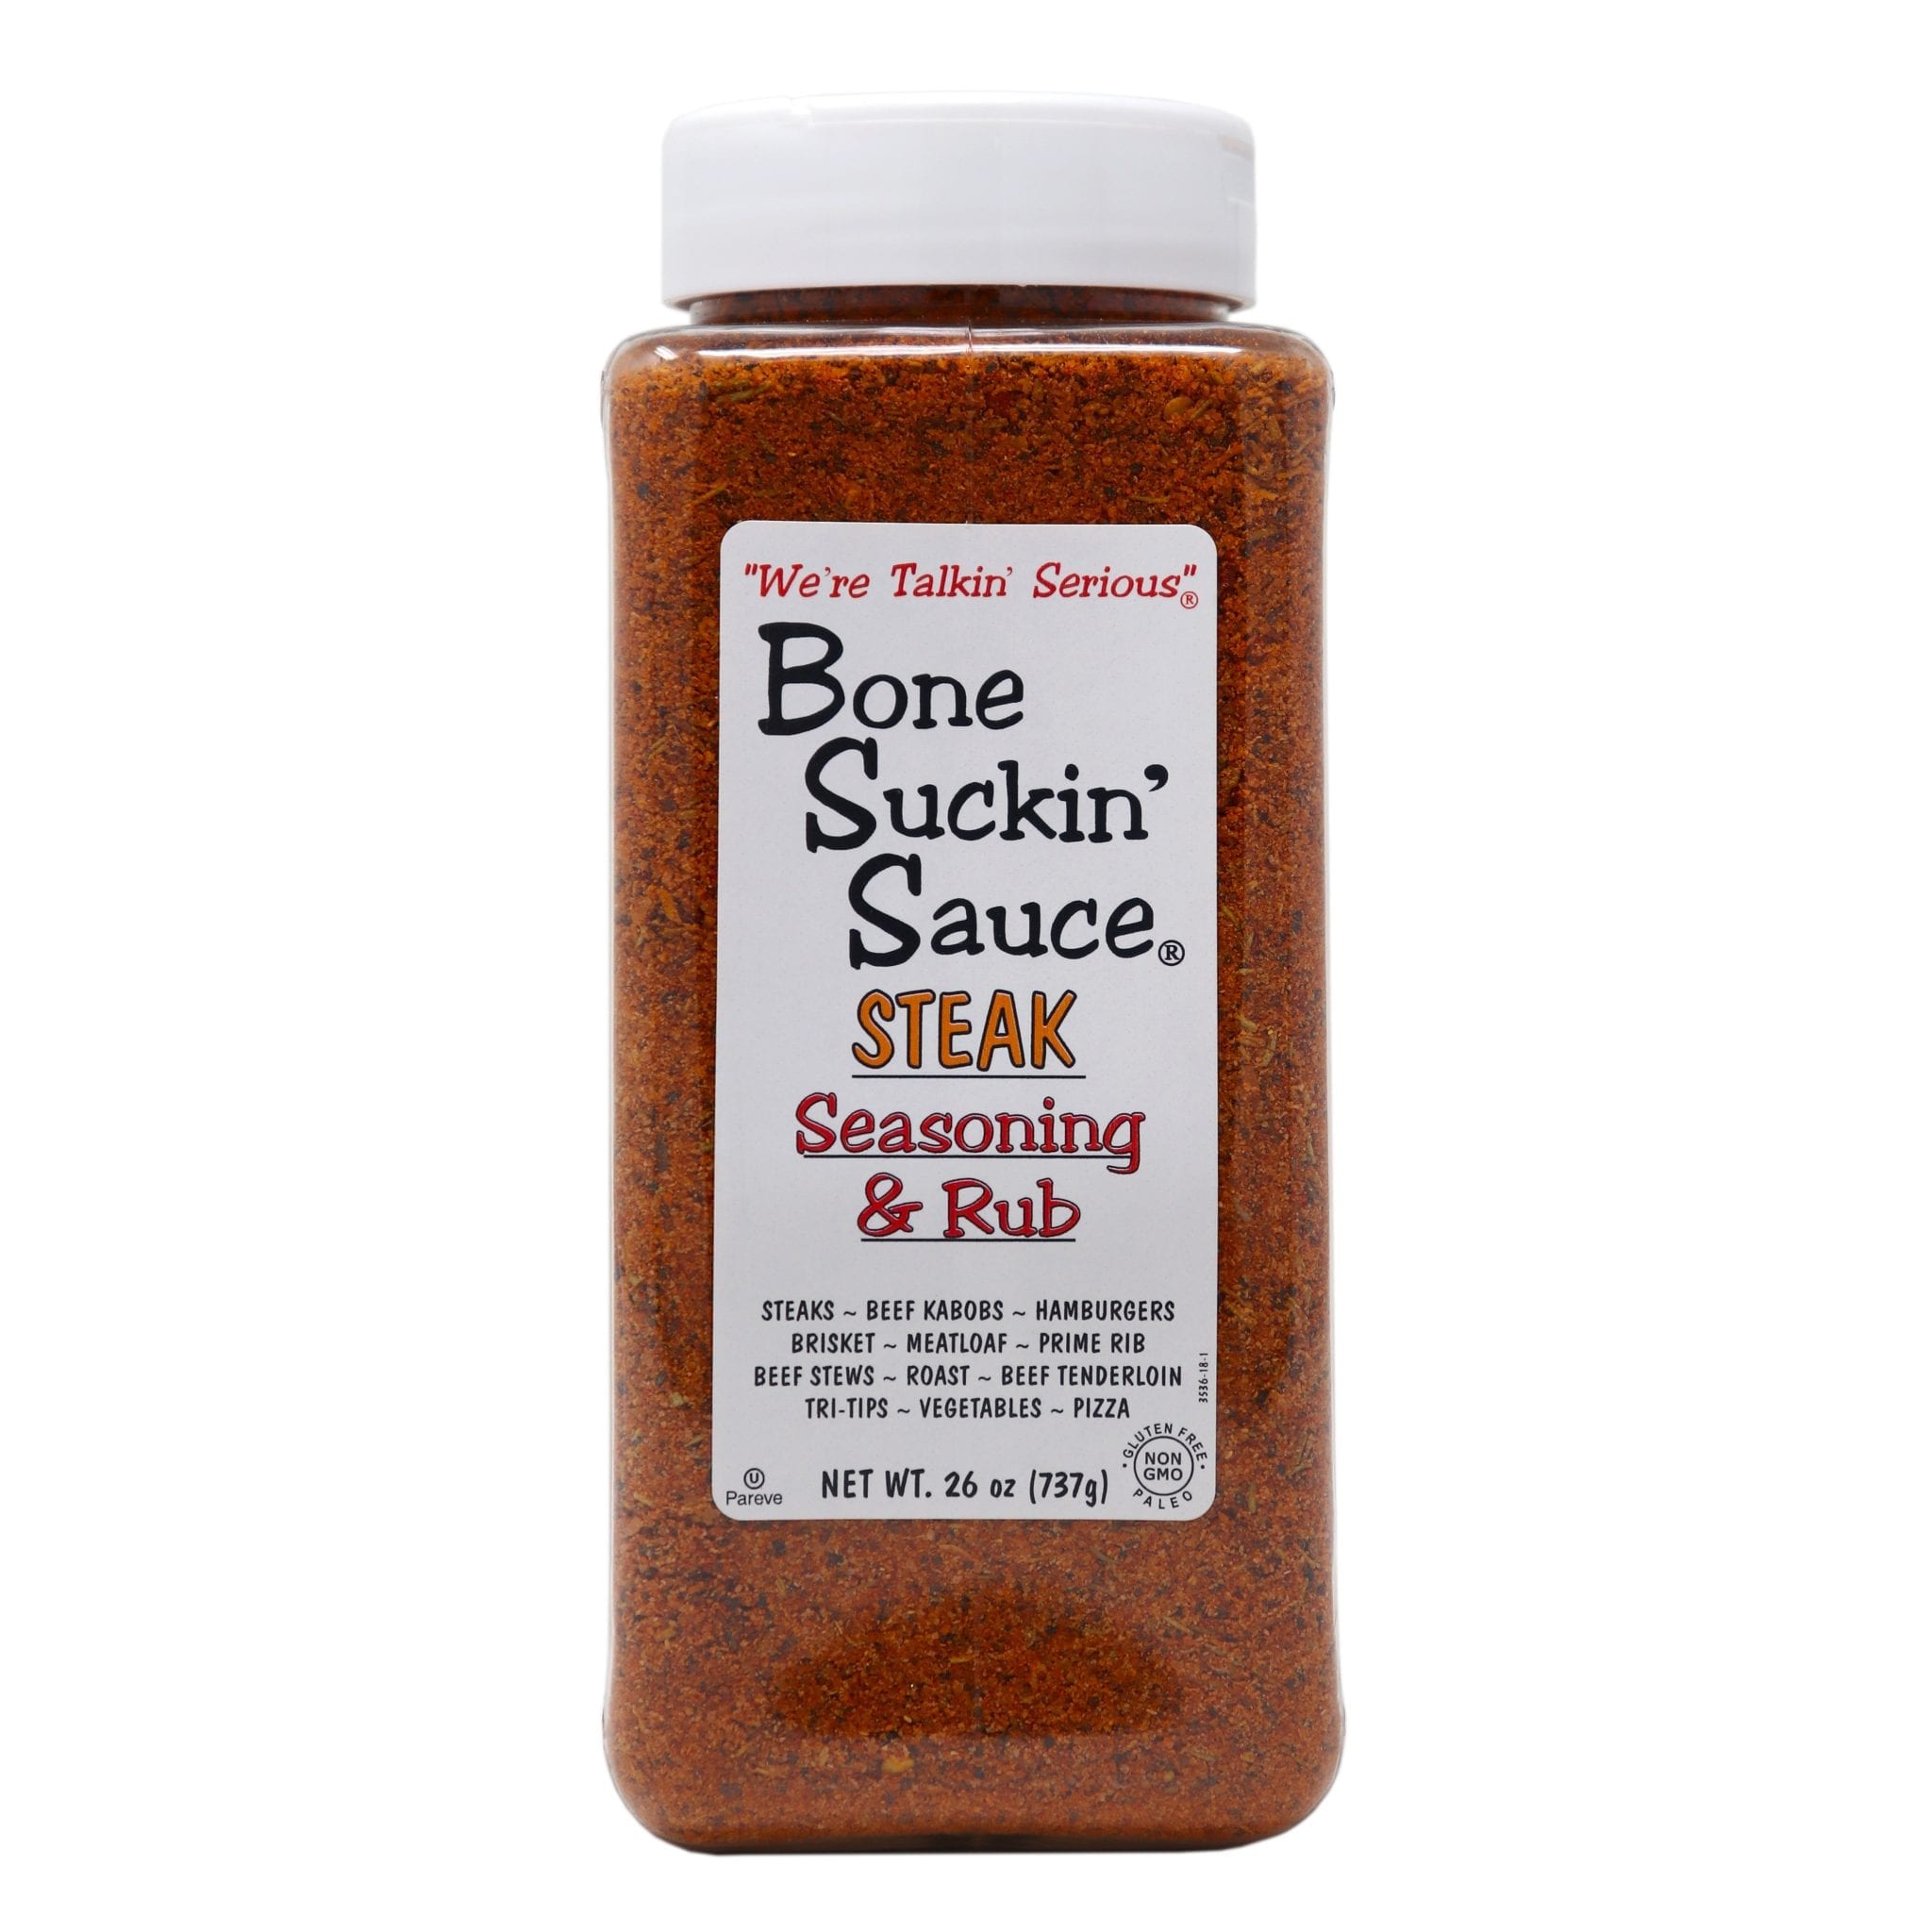 Bone Suckin’ Steak Seasoning & Rub 26 oz